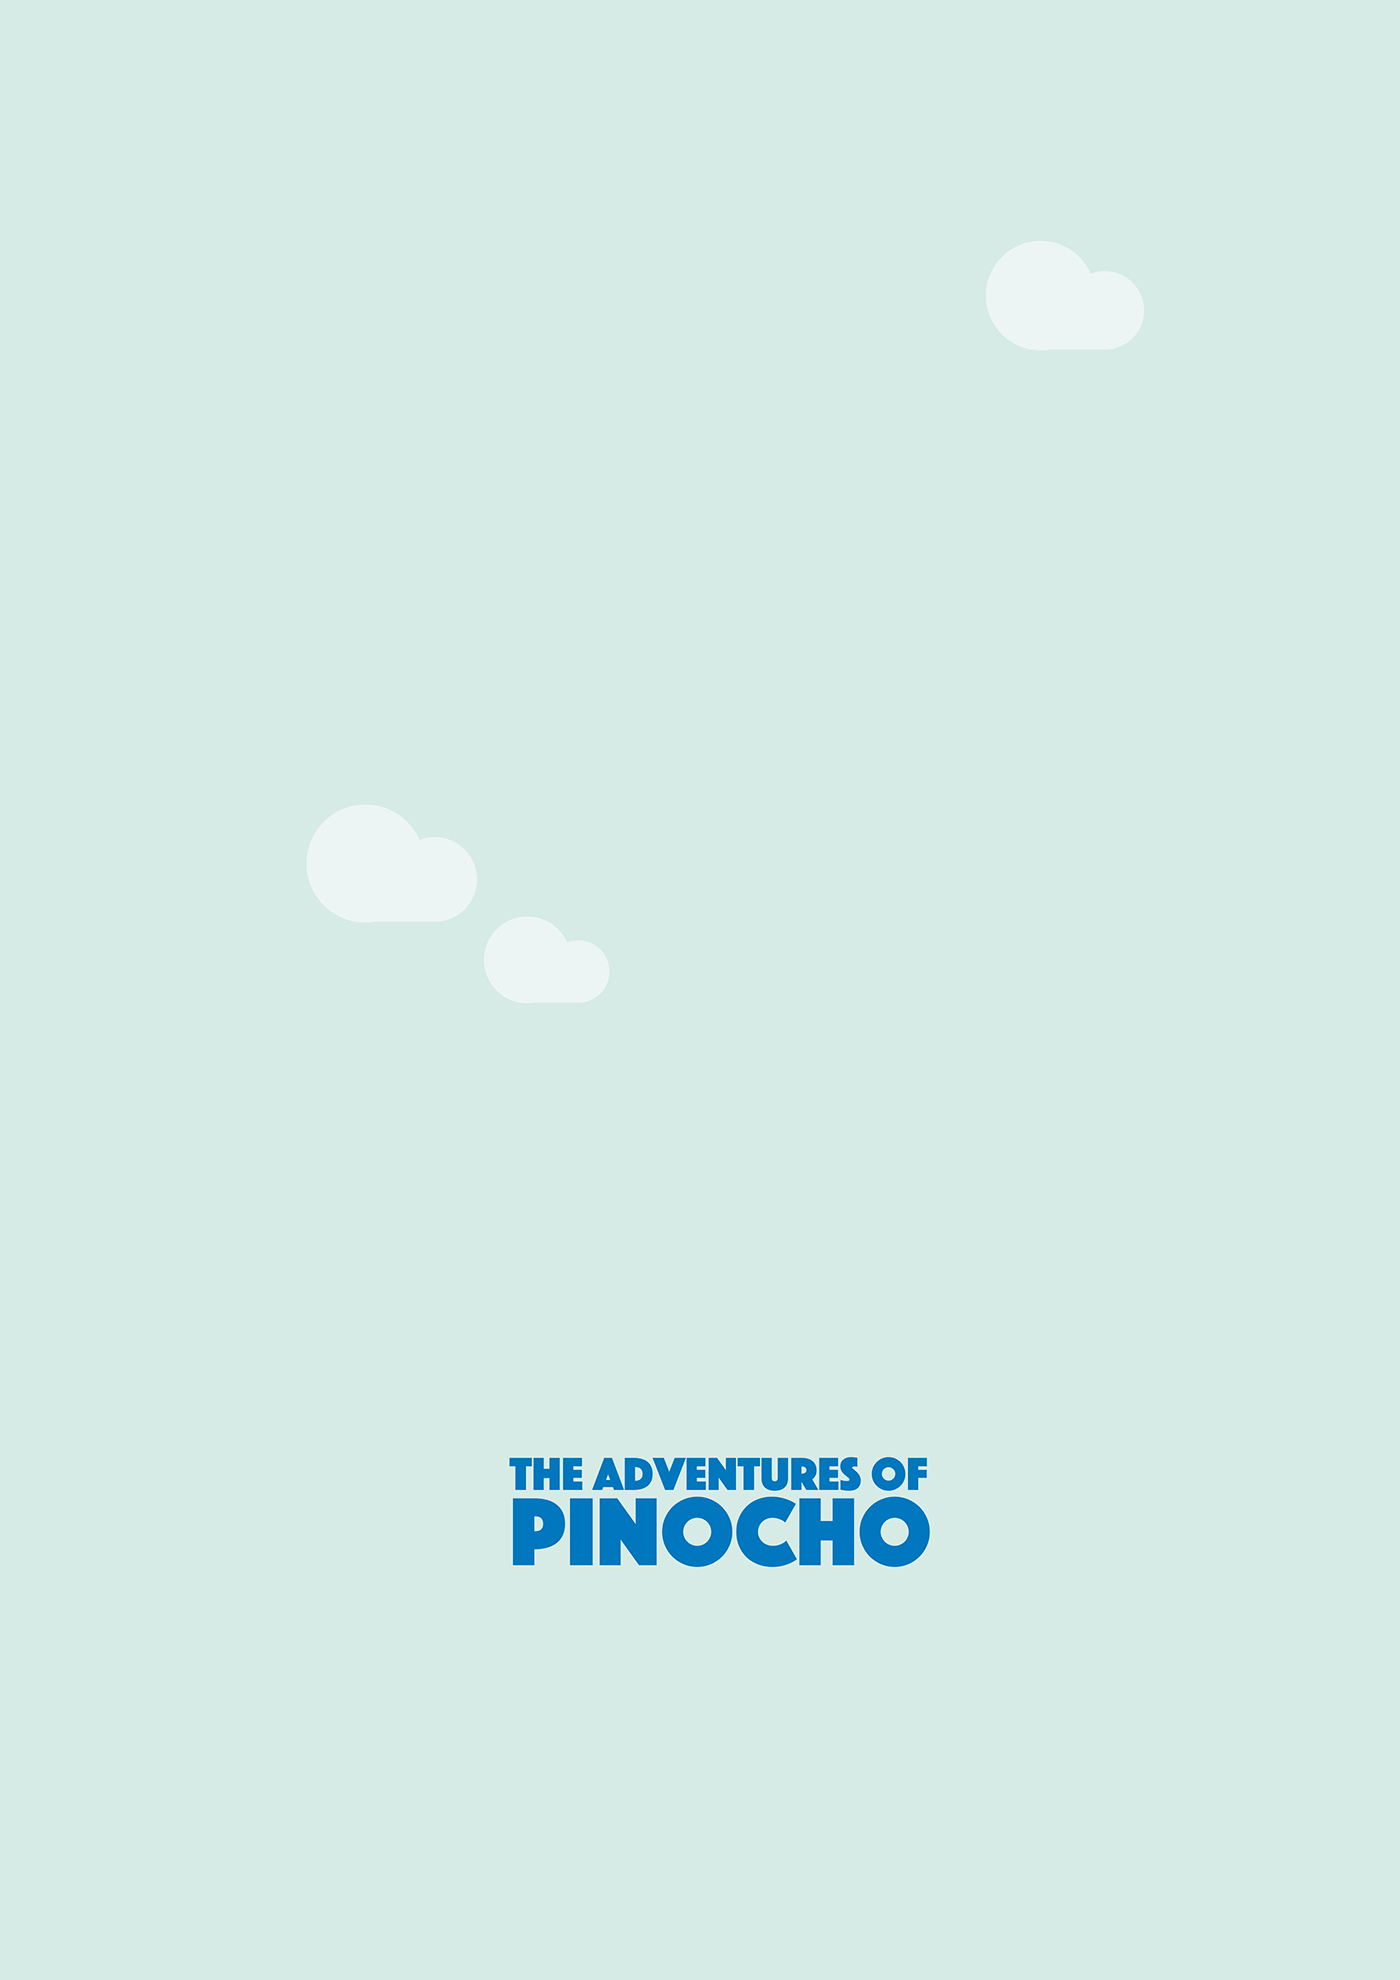 pinocho pinocchio PepitoGrillo Cricket consciousness nose lie adventures poster Illustrator wacom